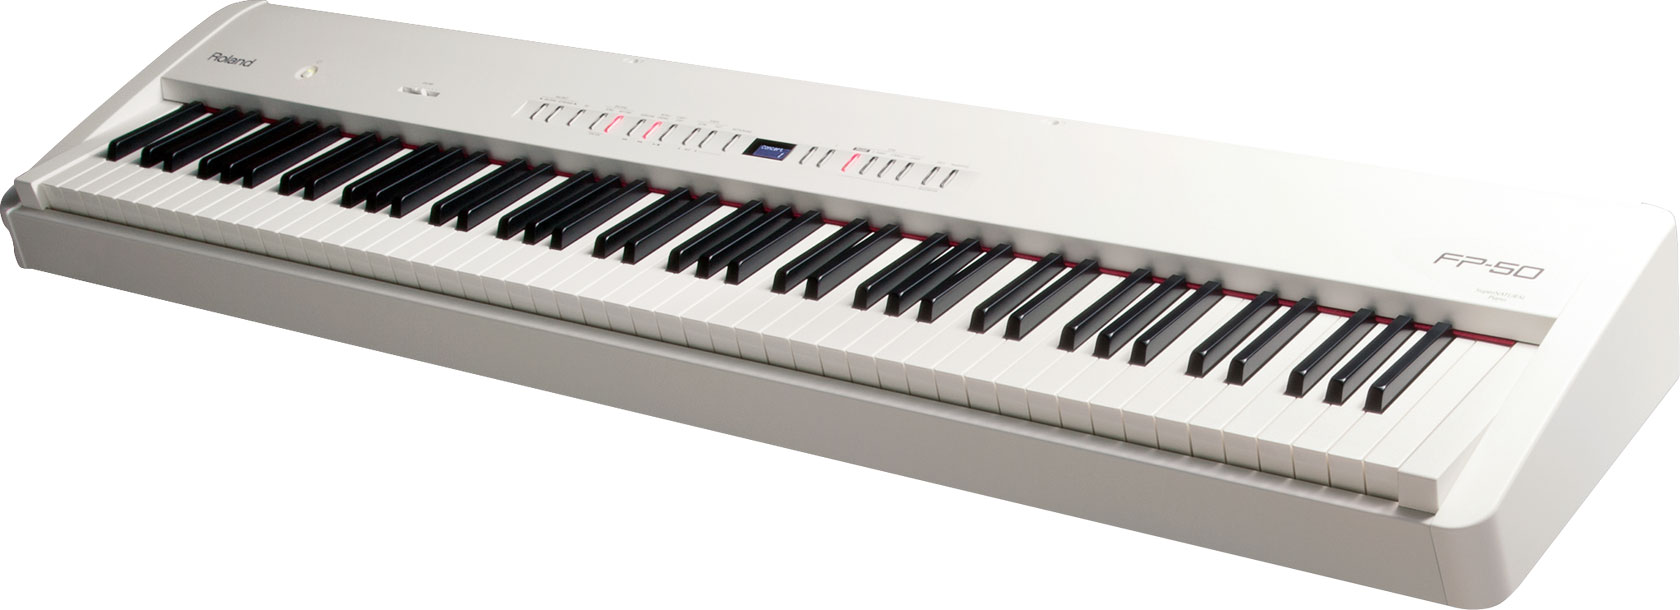 Цифровое пианино Roland FP-50-WH